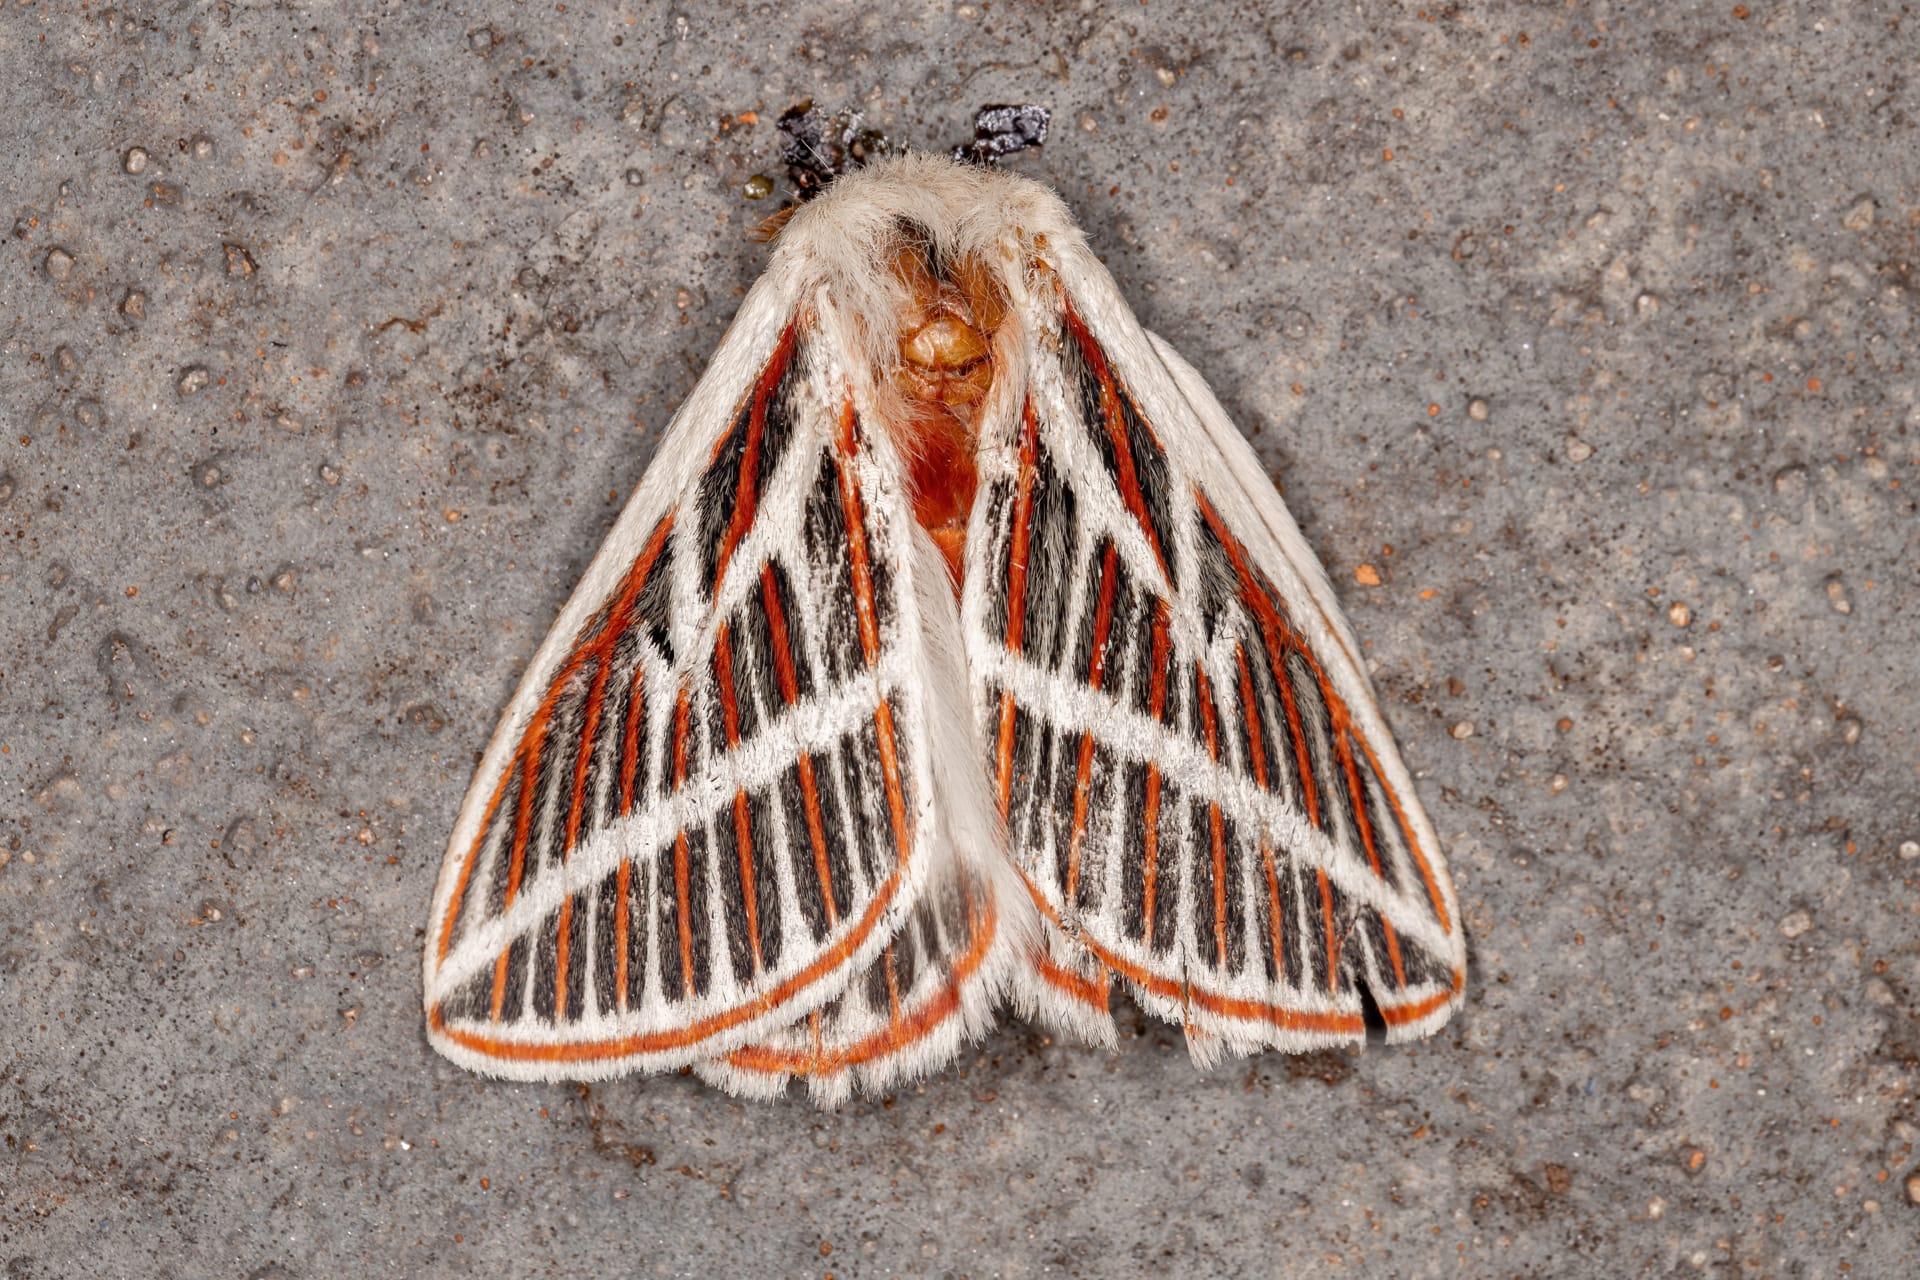 Cecropia moth pictures